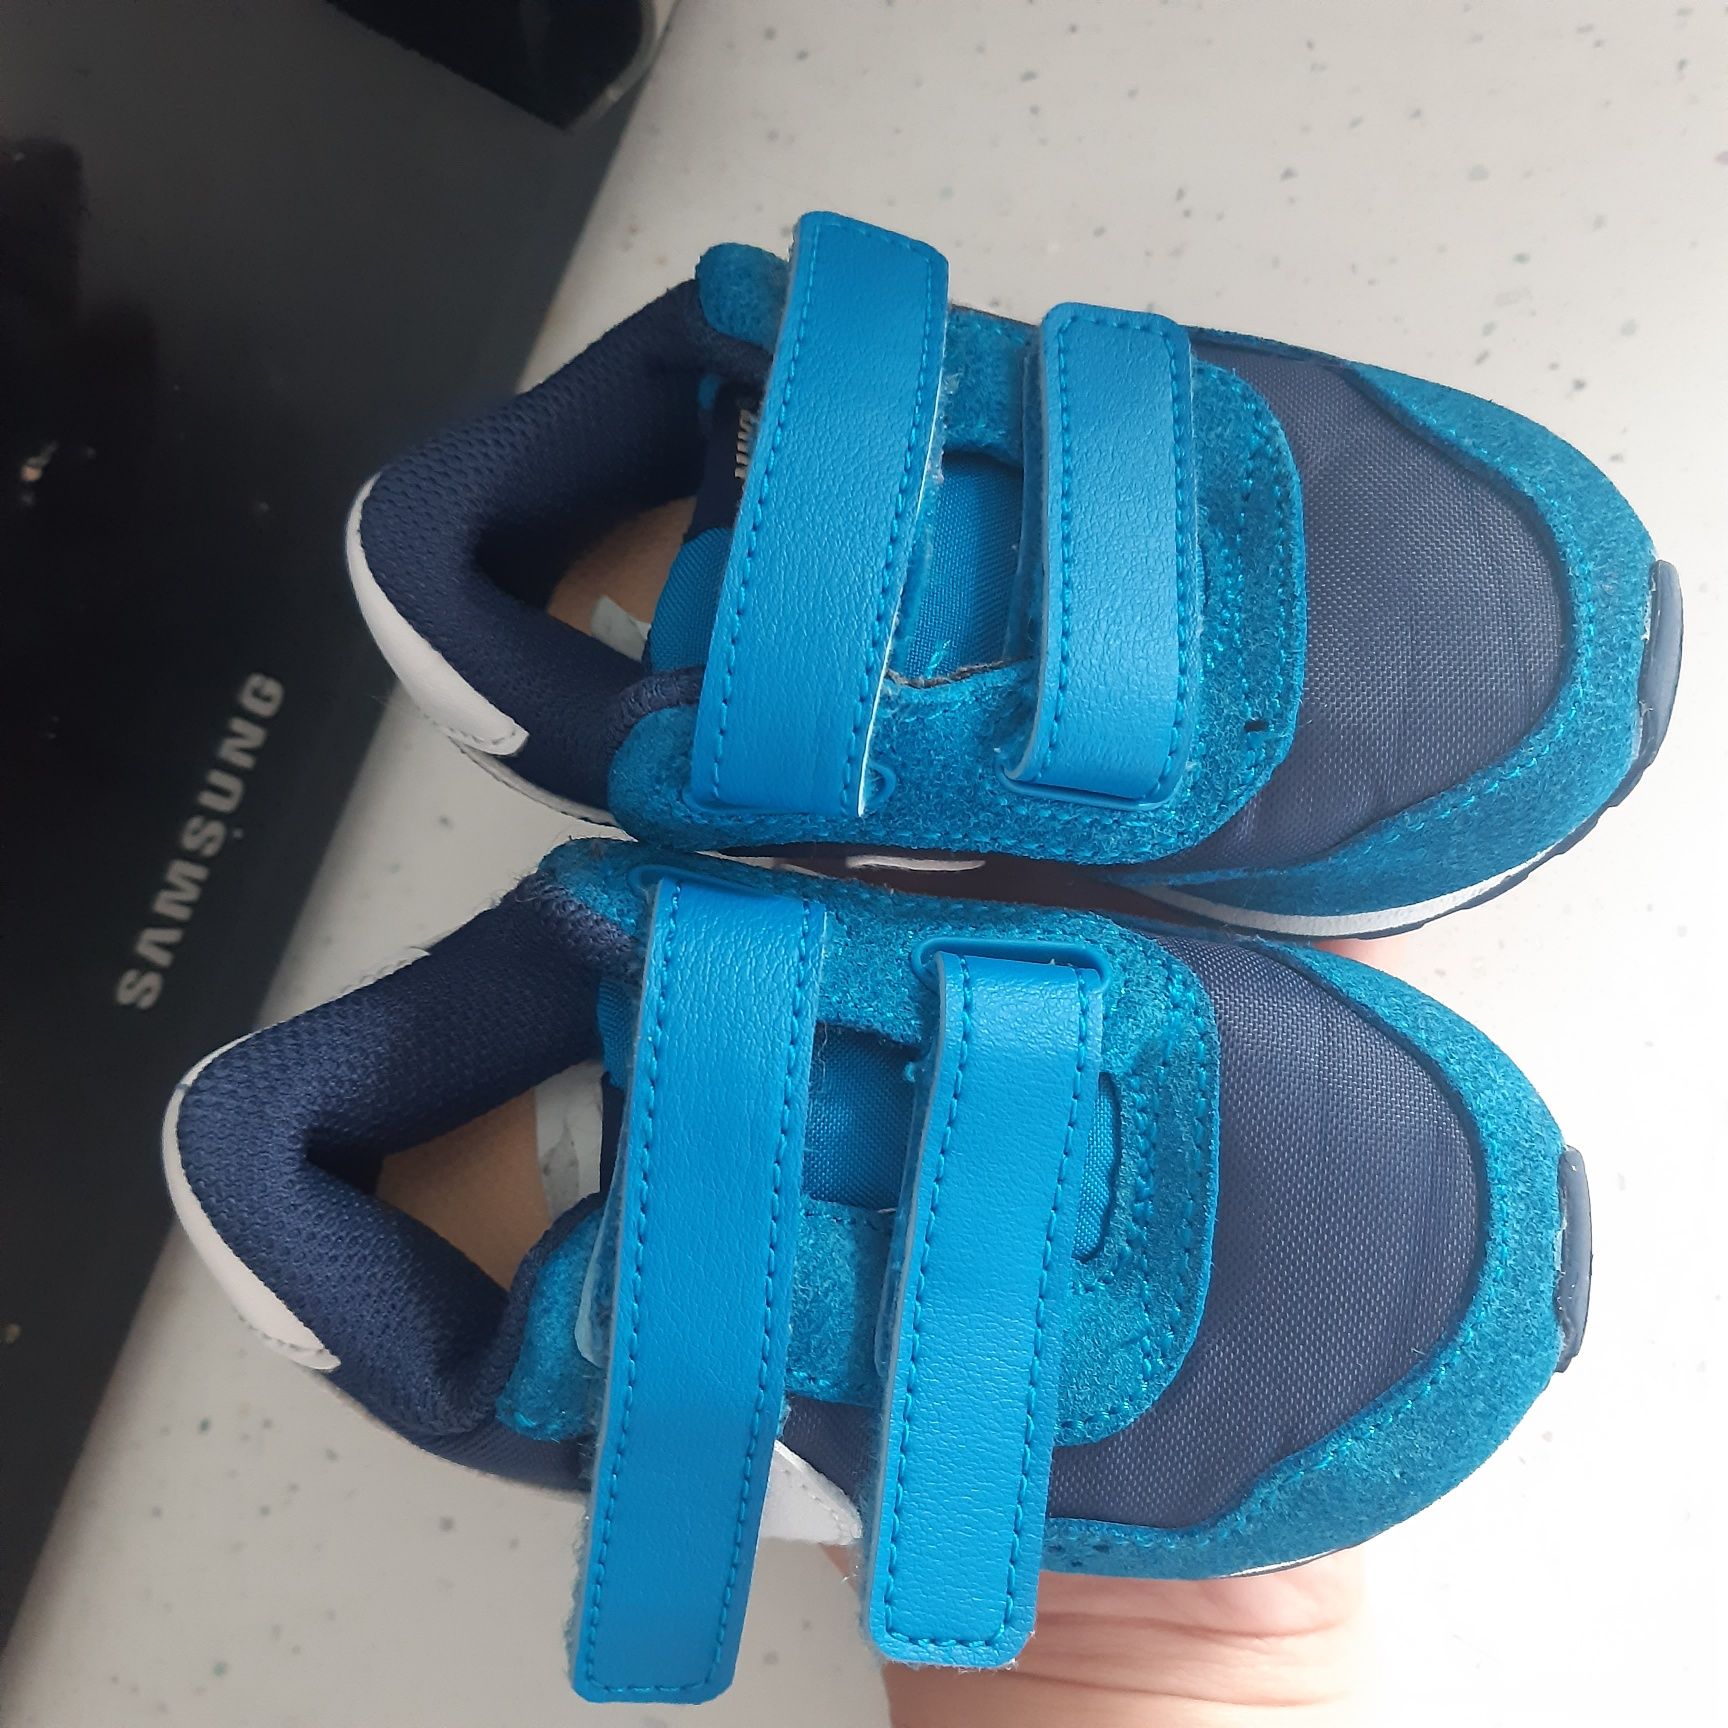 Бебешки обувки за прохождащи деца-Ponki, Nike, Adidas